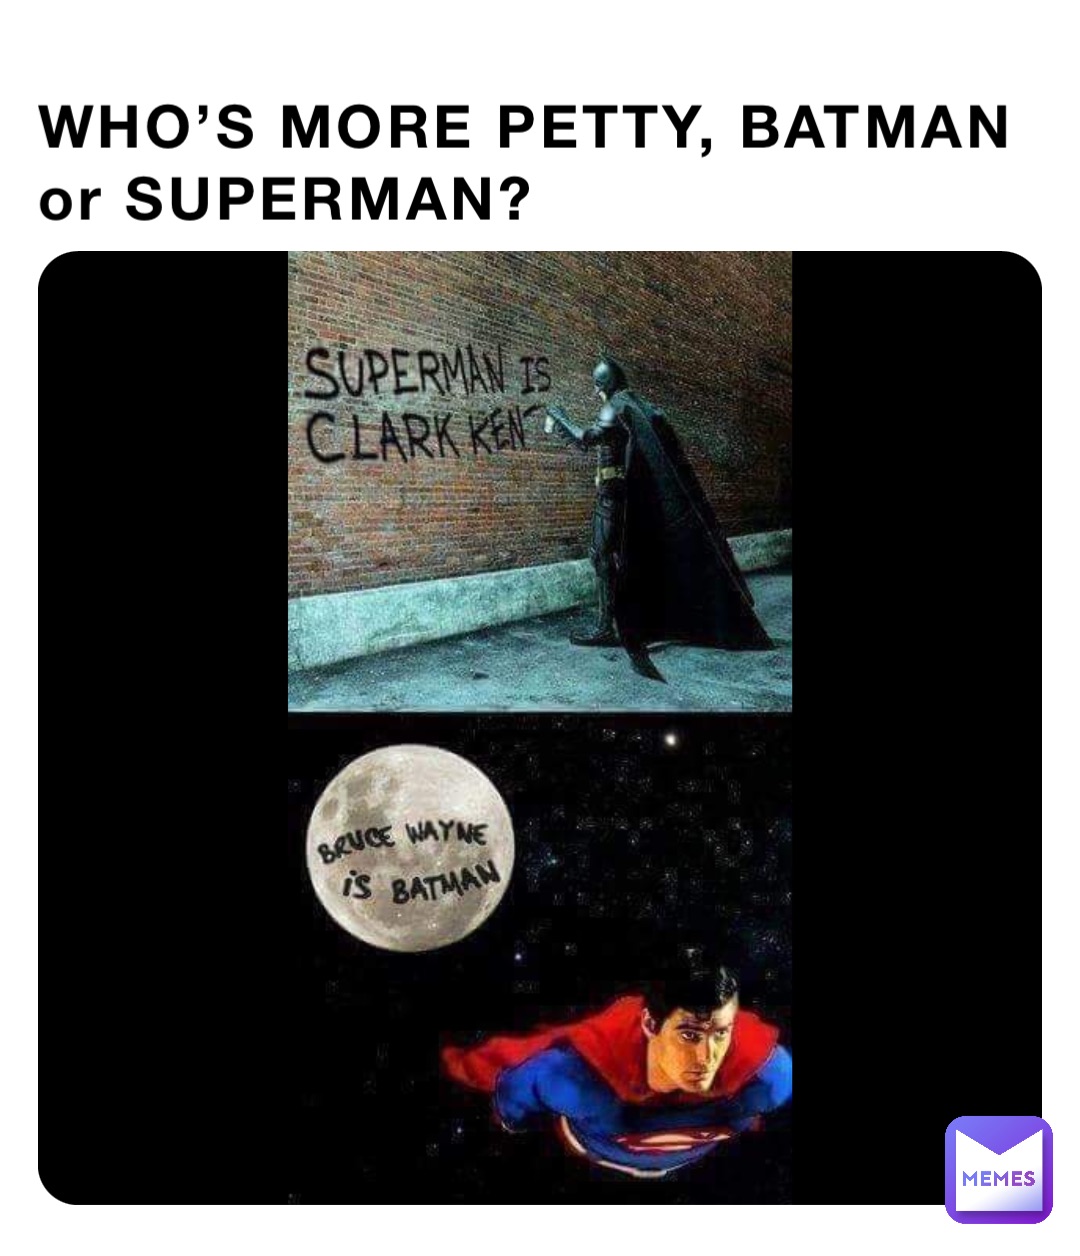 WHO’S MORE PETTY, BATMAN or SUPERMAN?